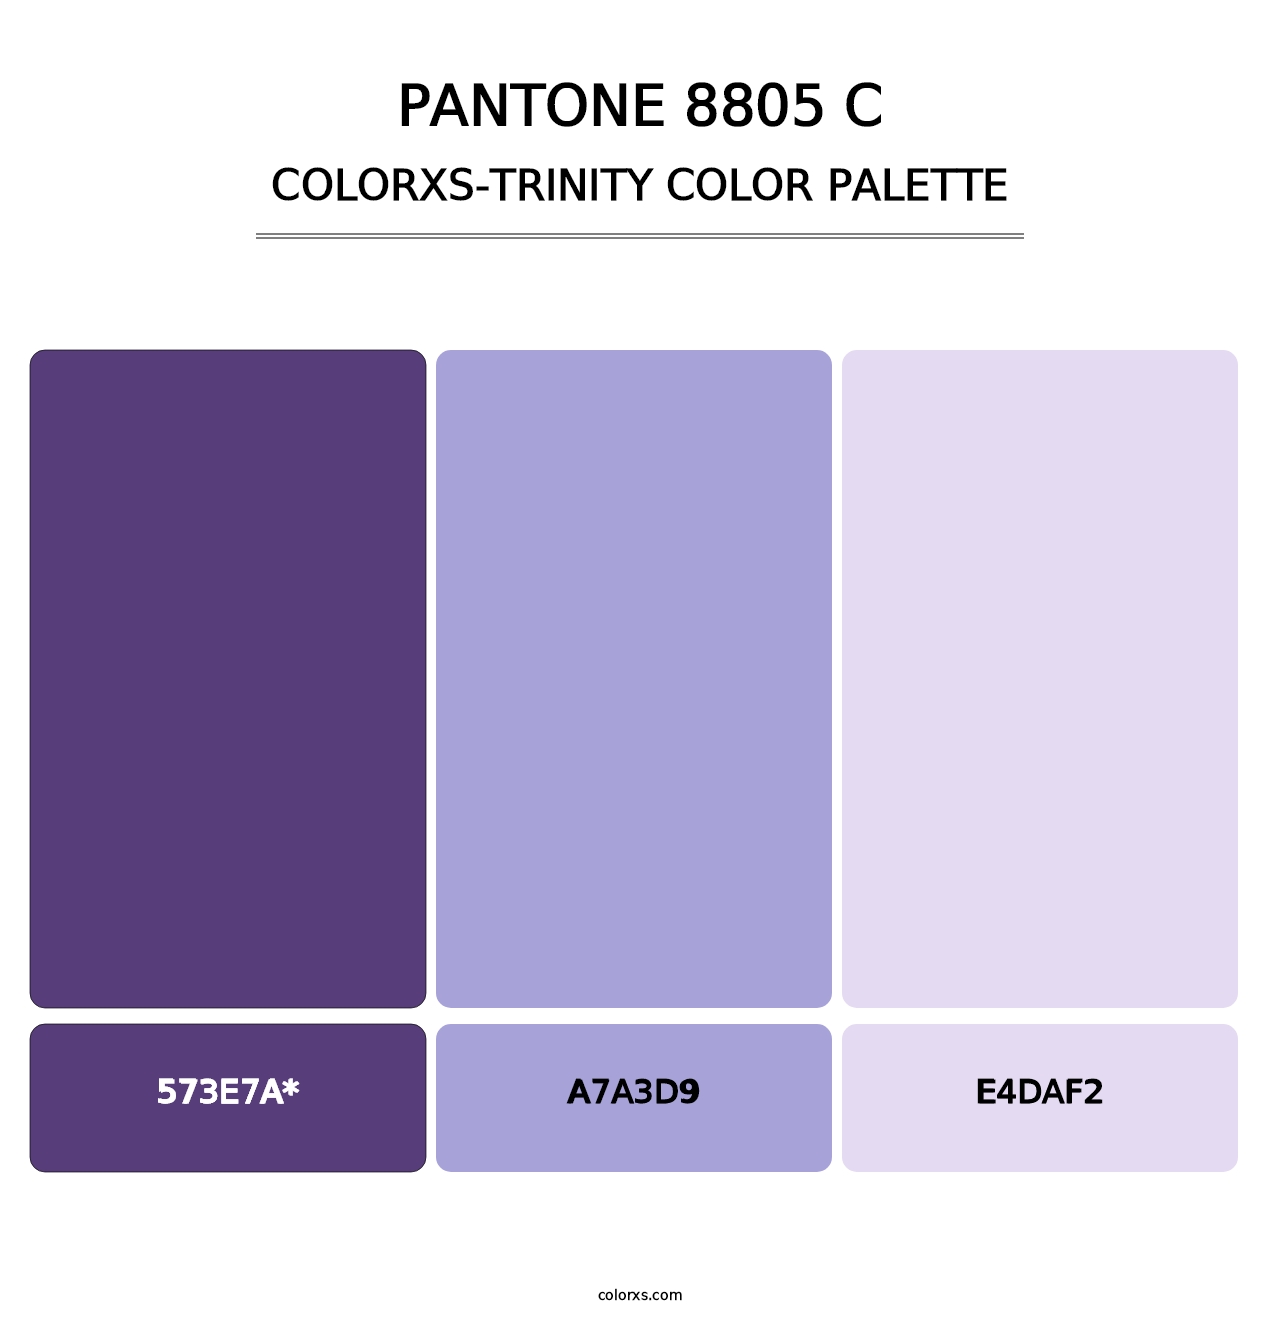 PANTONE 8805 C - Colorxs Trinity Palette